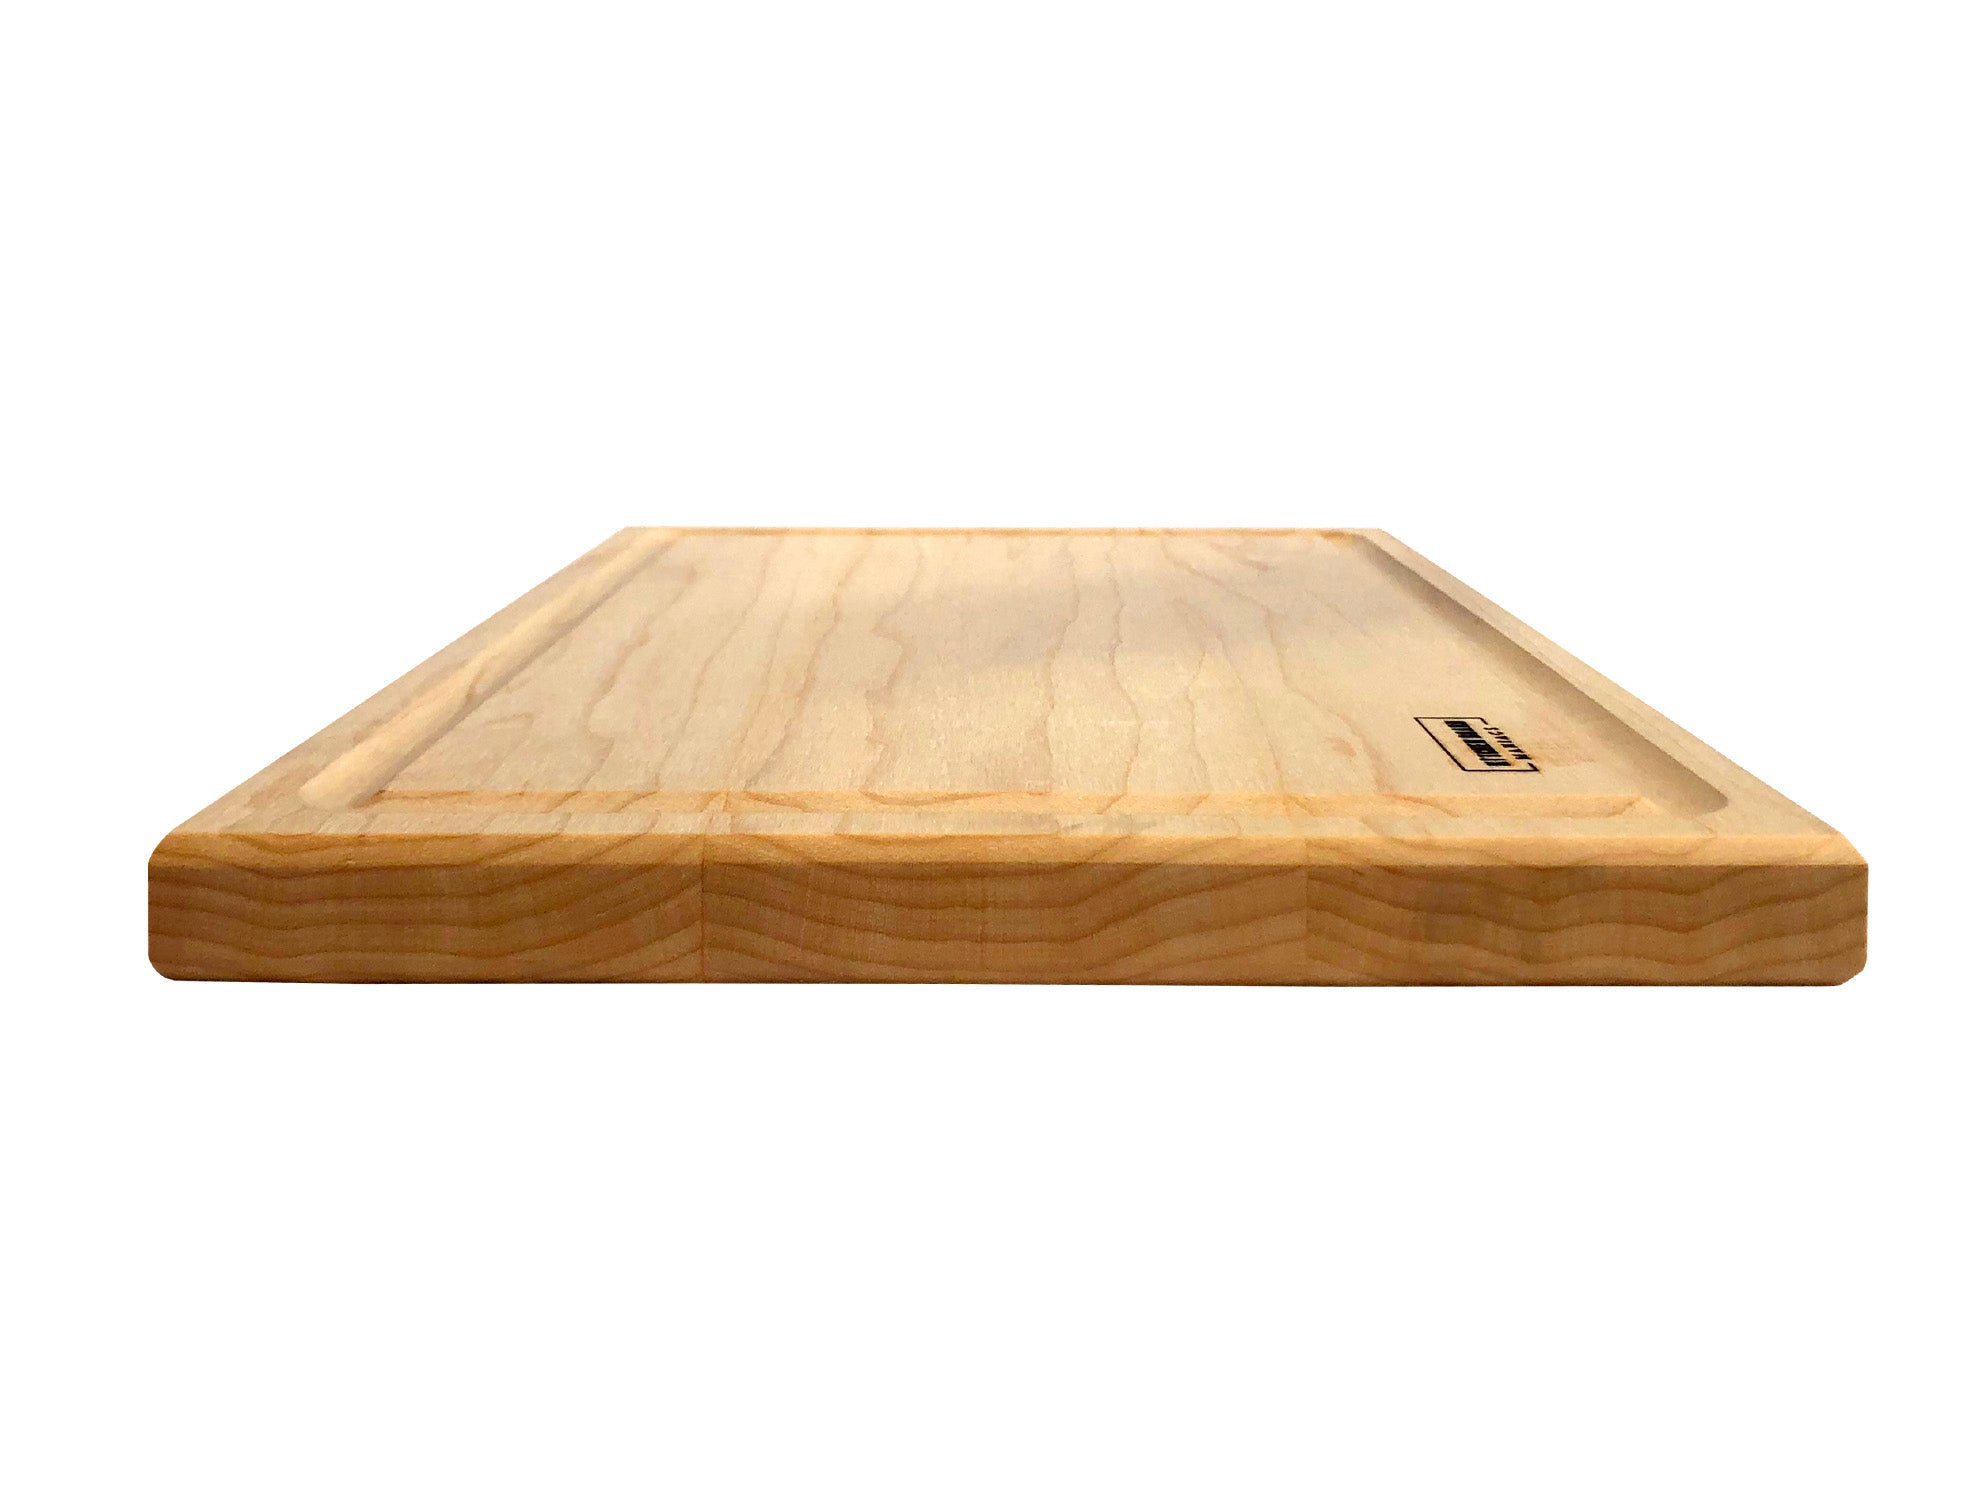 Solid Wood Cutting Board Medium Cutting Boards for Kitchen